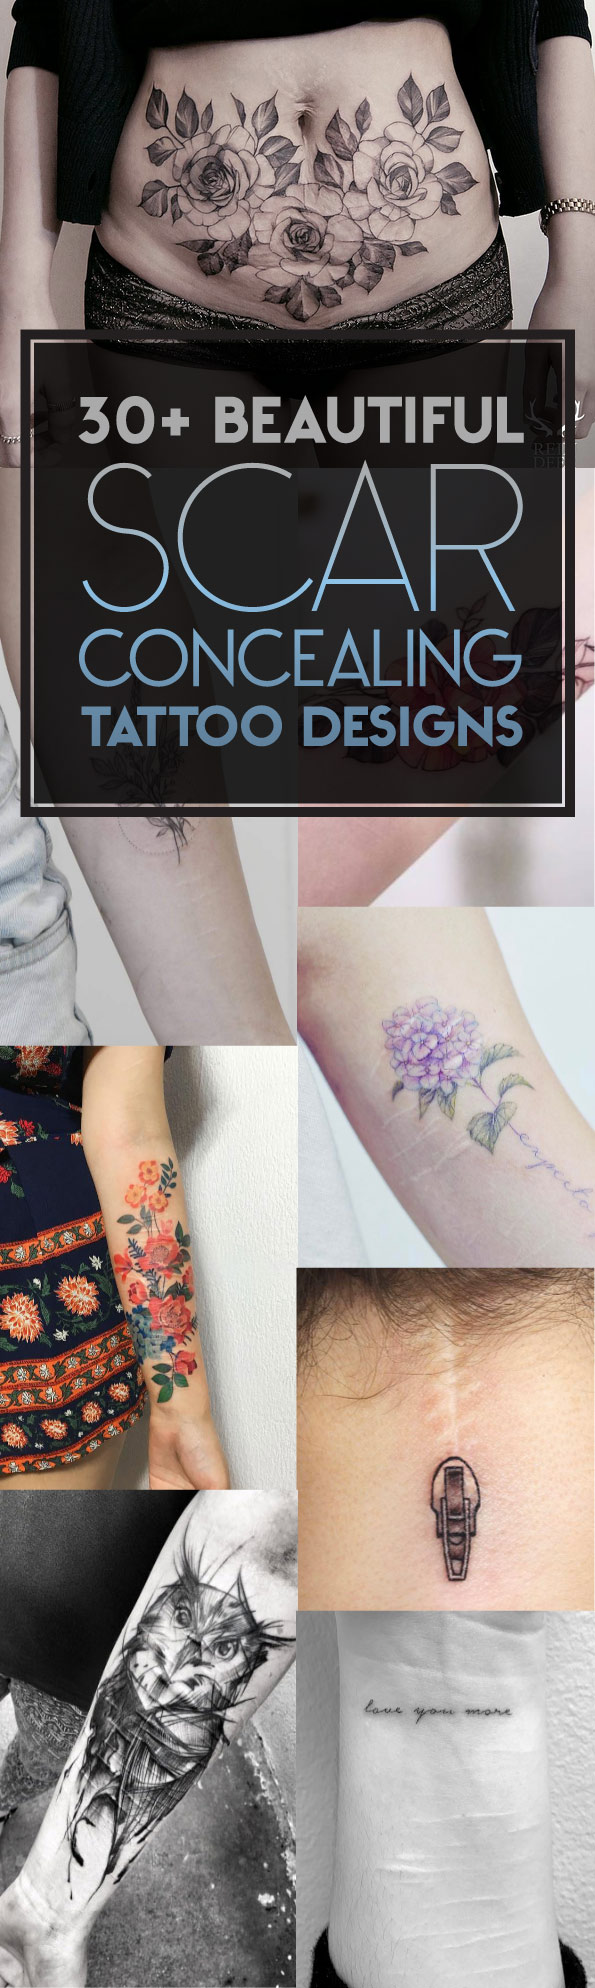 30+ Beautiful Scar-Concealing Tattoo Designs | TattooBlend